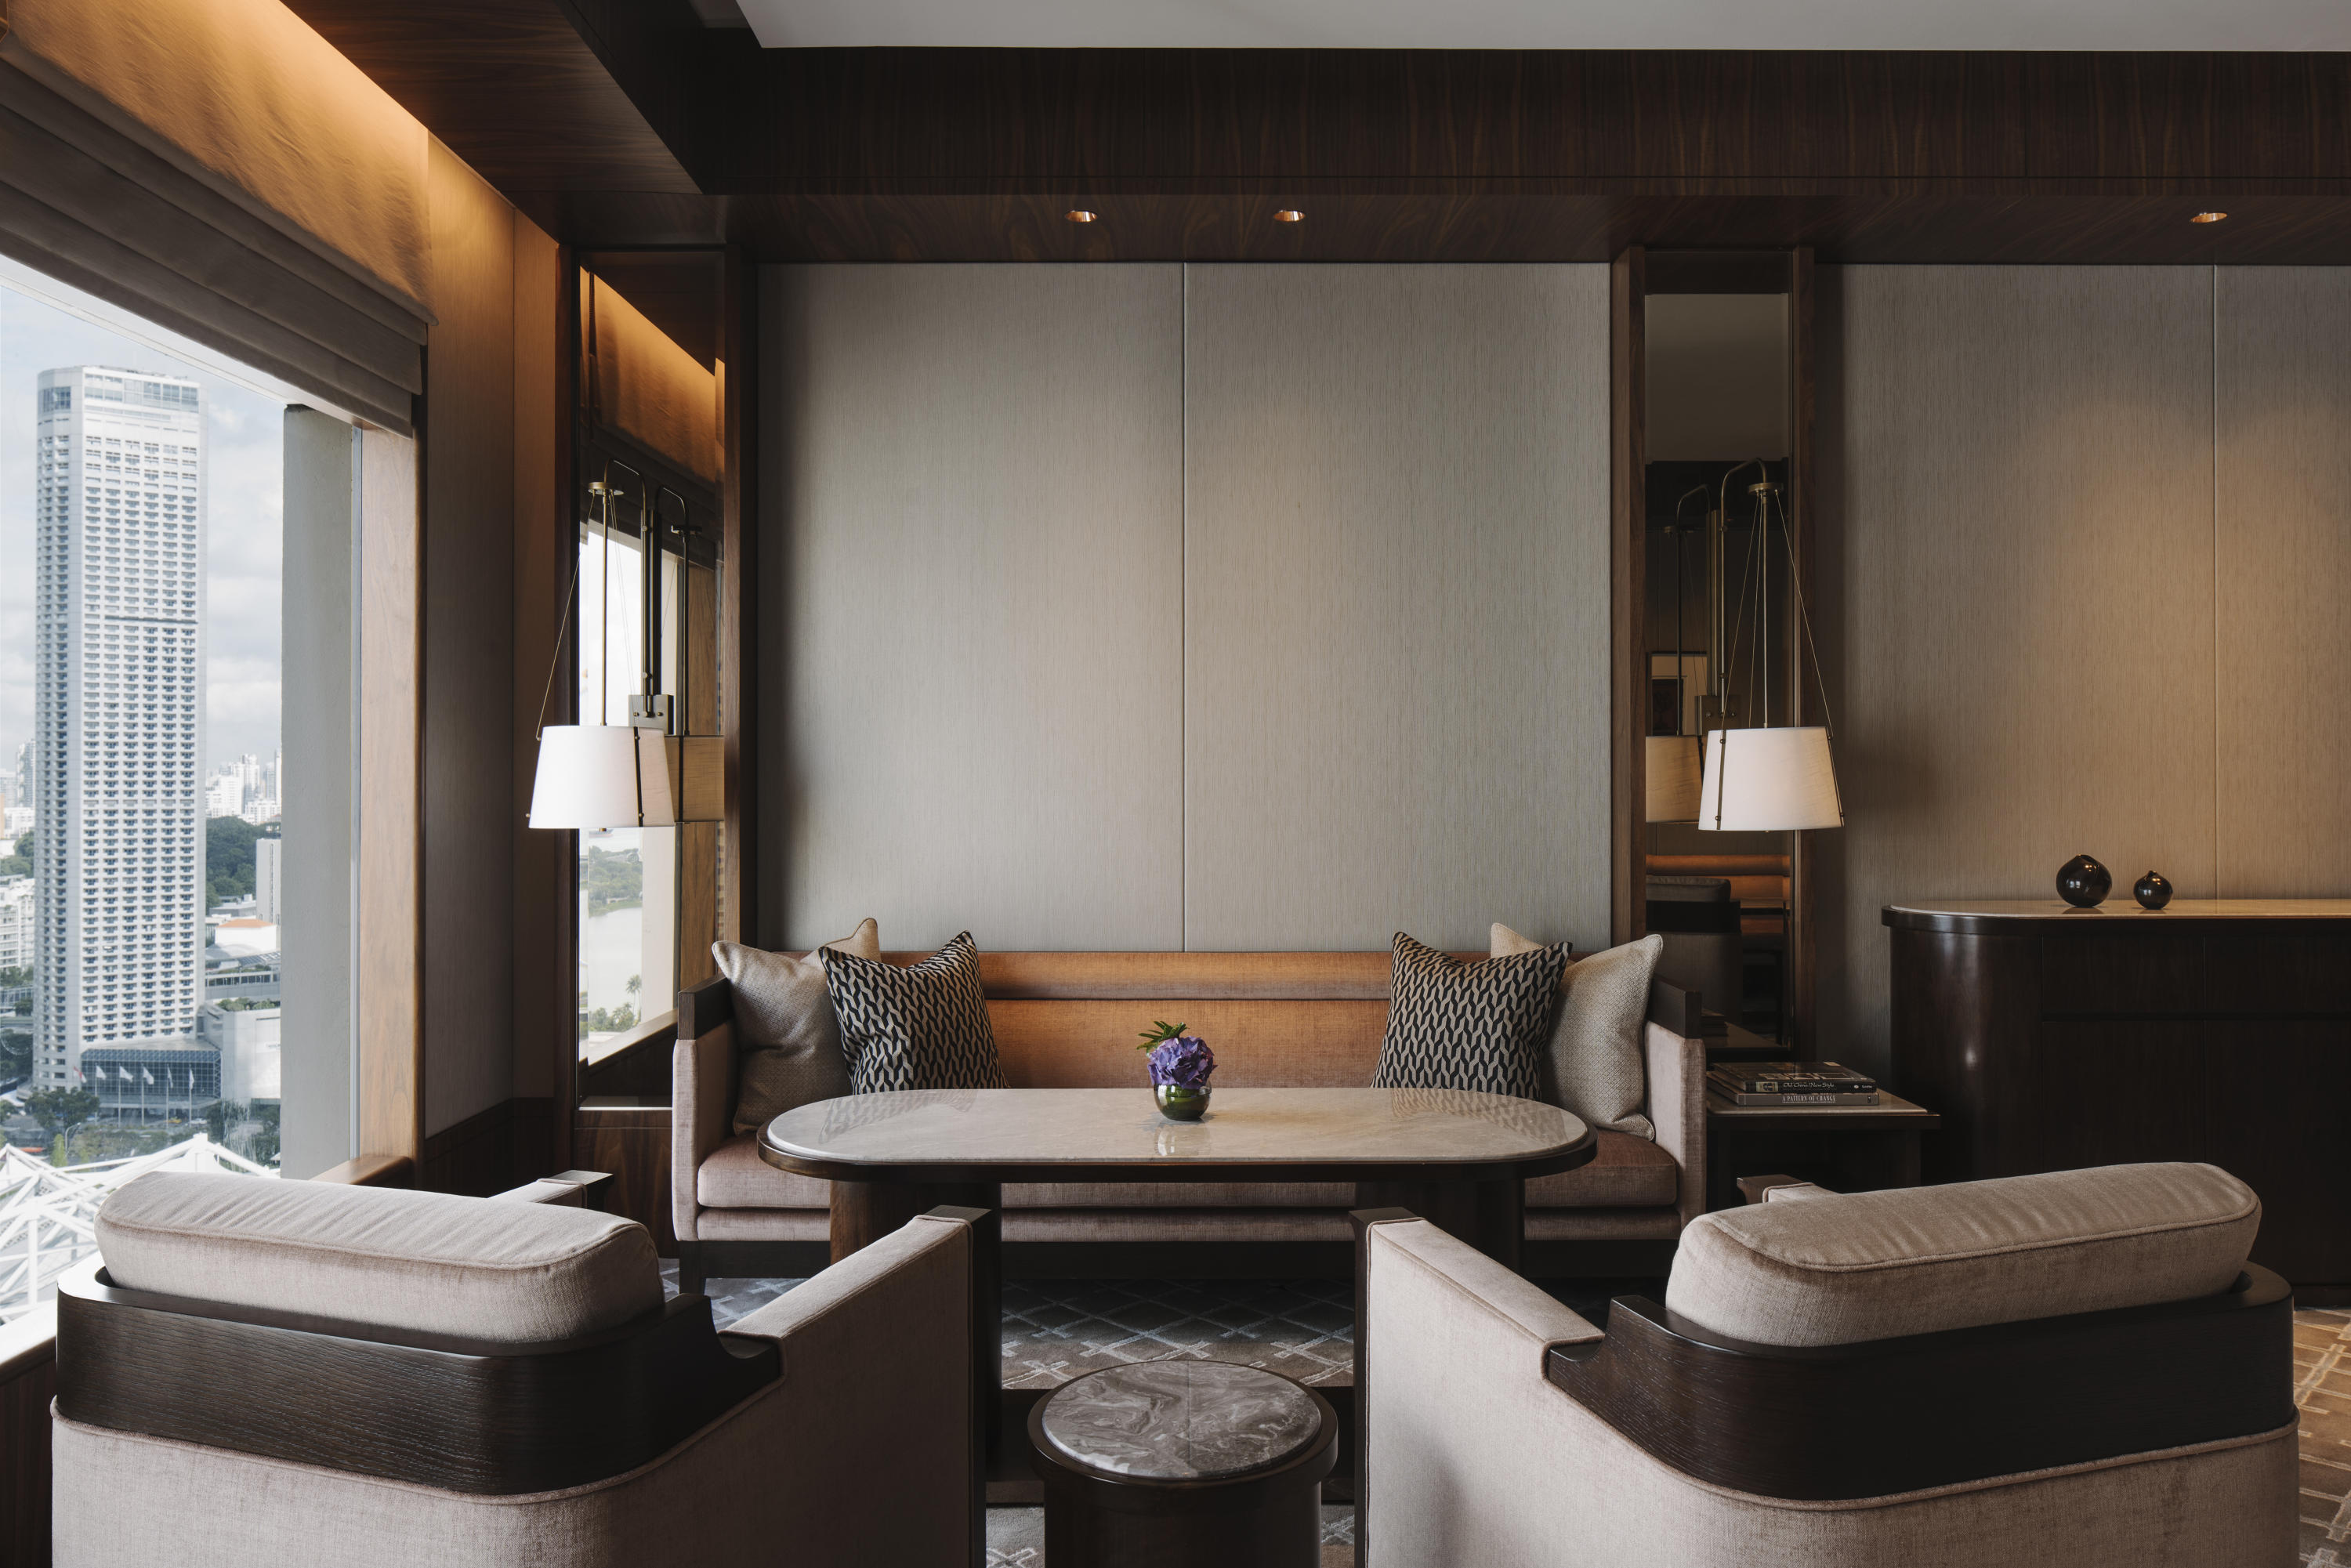 Executive Lounge Conrad Hotel By Brewin Design Office Hotel